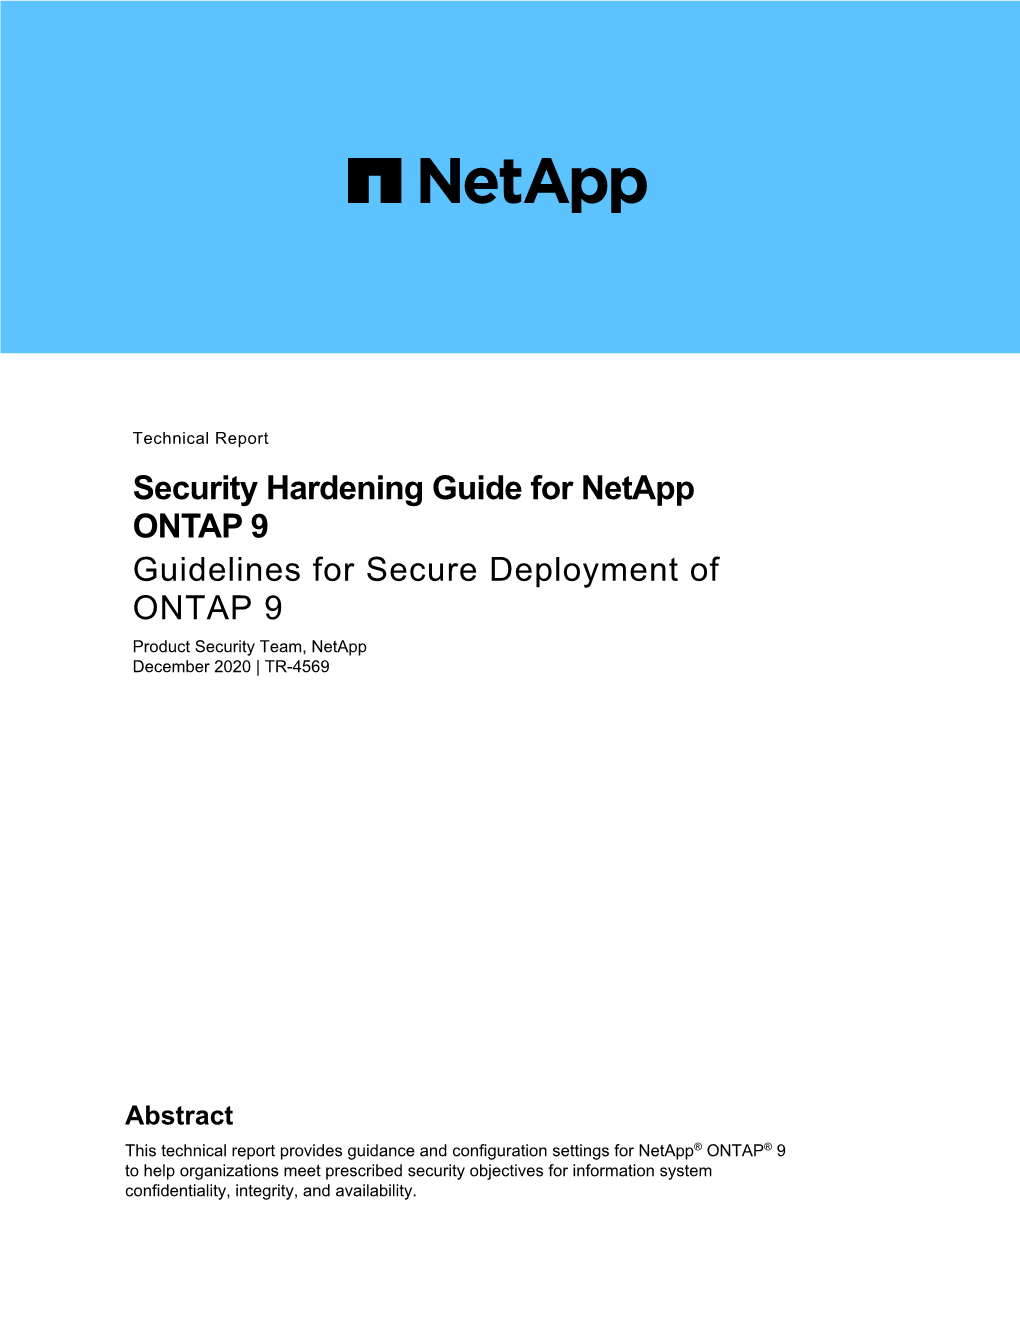 TR-4569: Security Hardening Guide for Netapp ONTAP 9